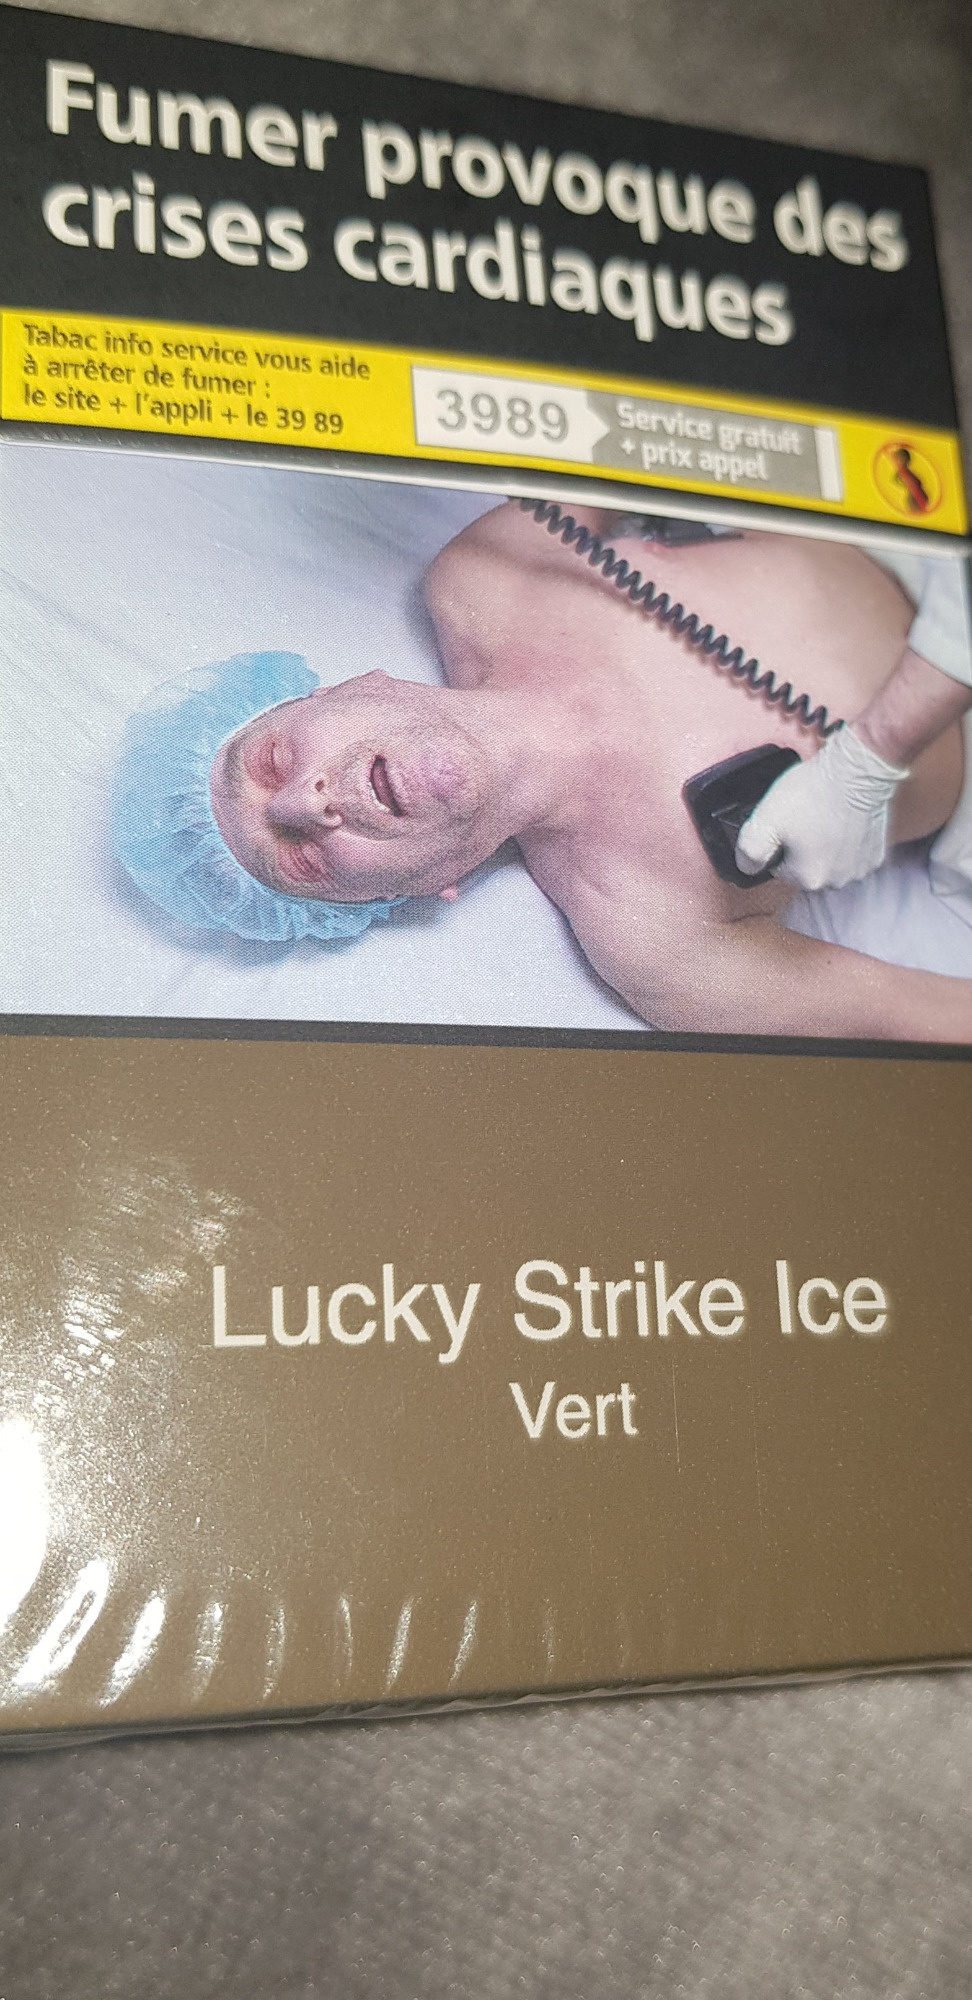 Lucky strick ice vert - Produit - fr